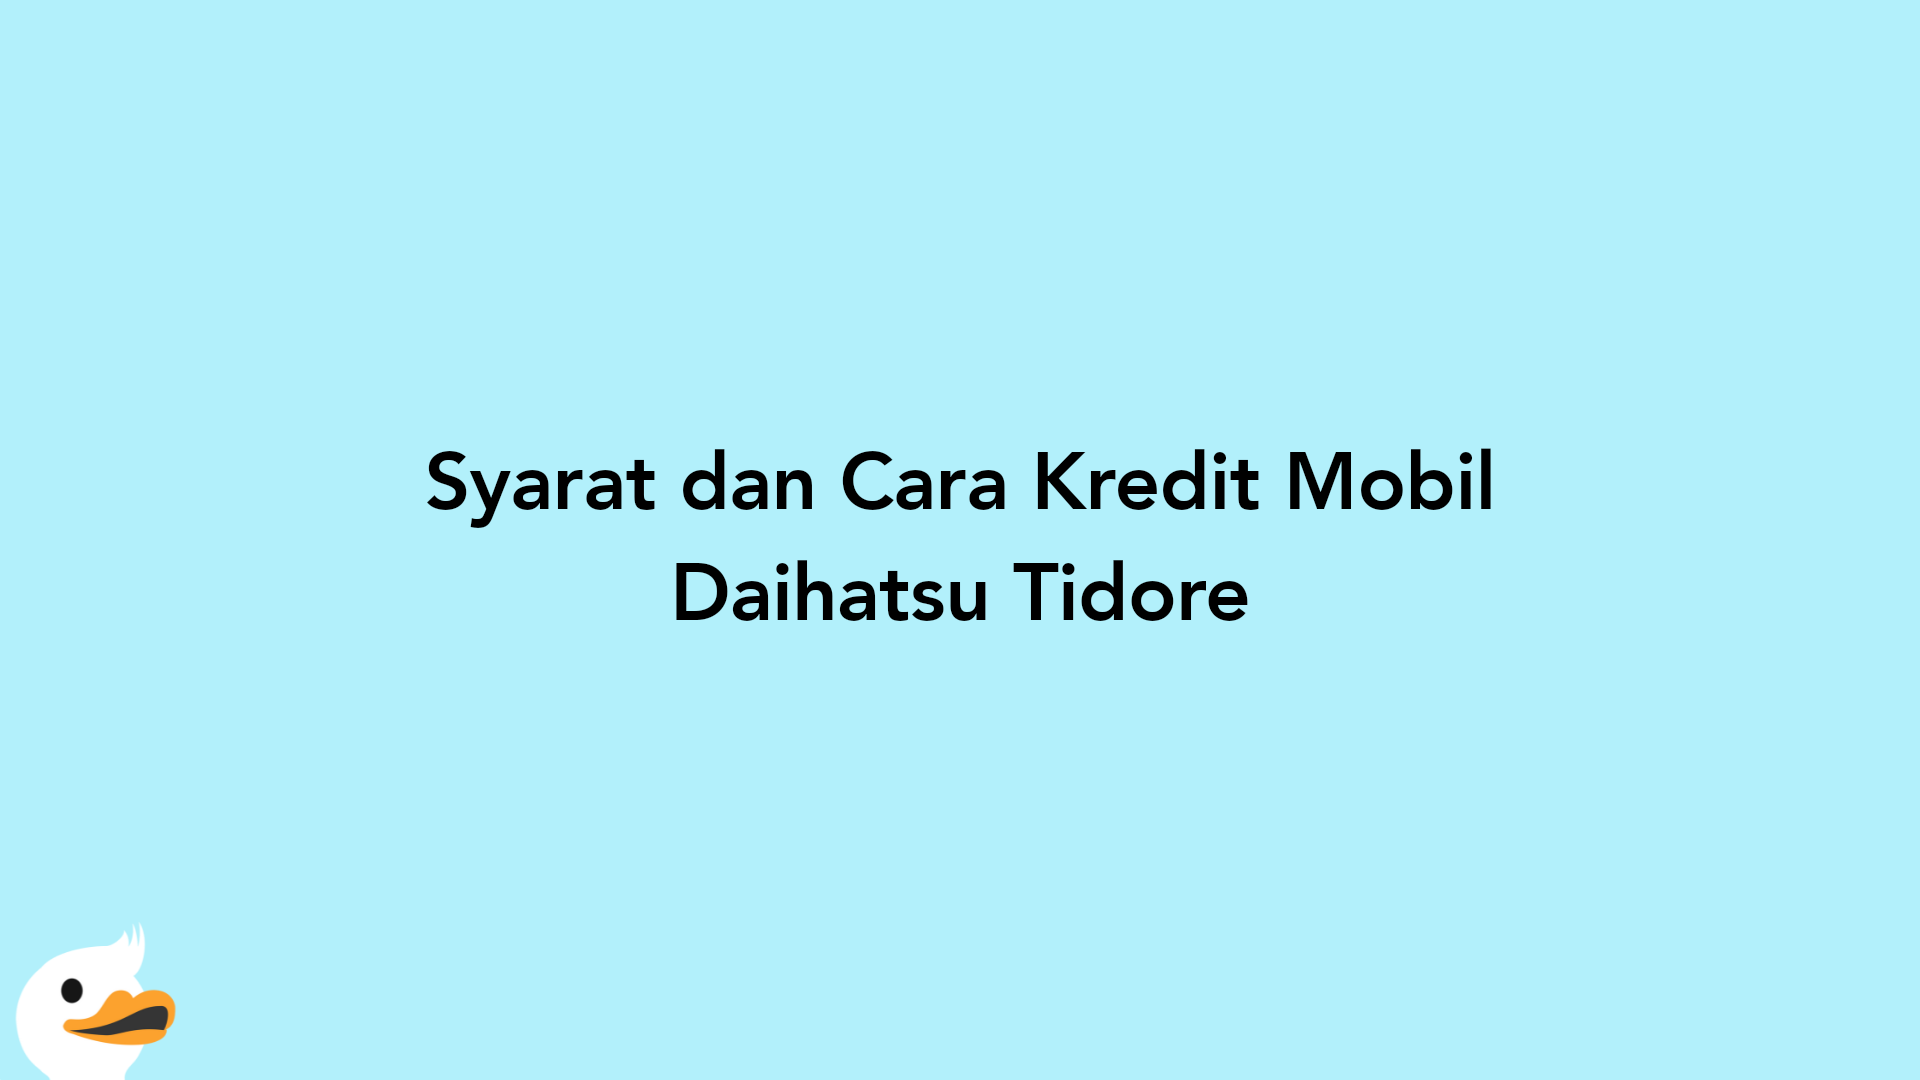 Syarat dan Cara Kredit Mobil Daihatsu Tidore